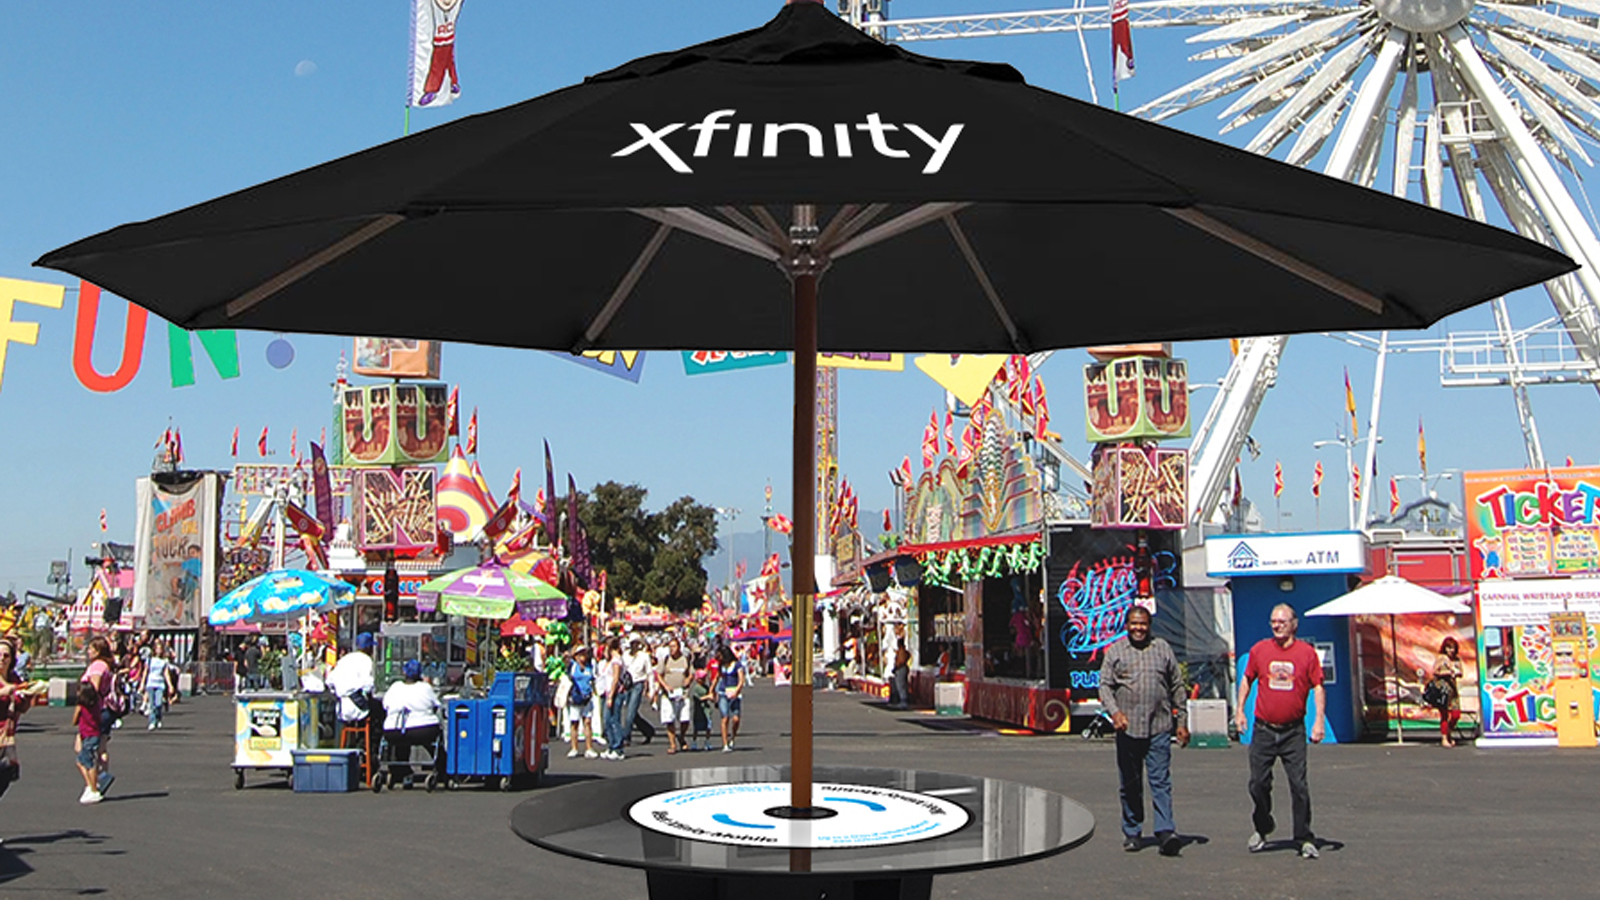 A large sun umbrella displaying the Xfinity logo.